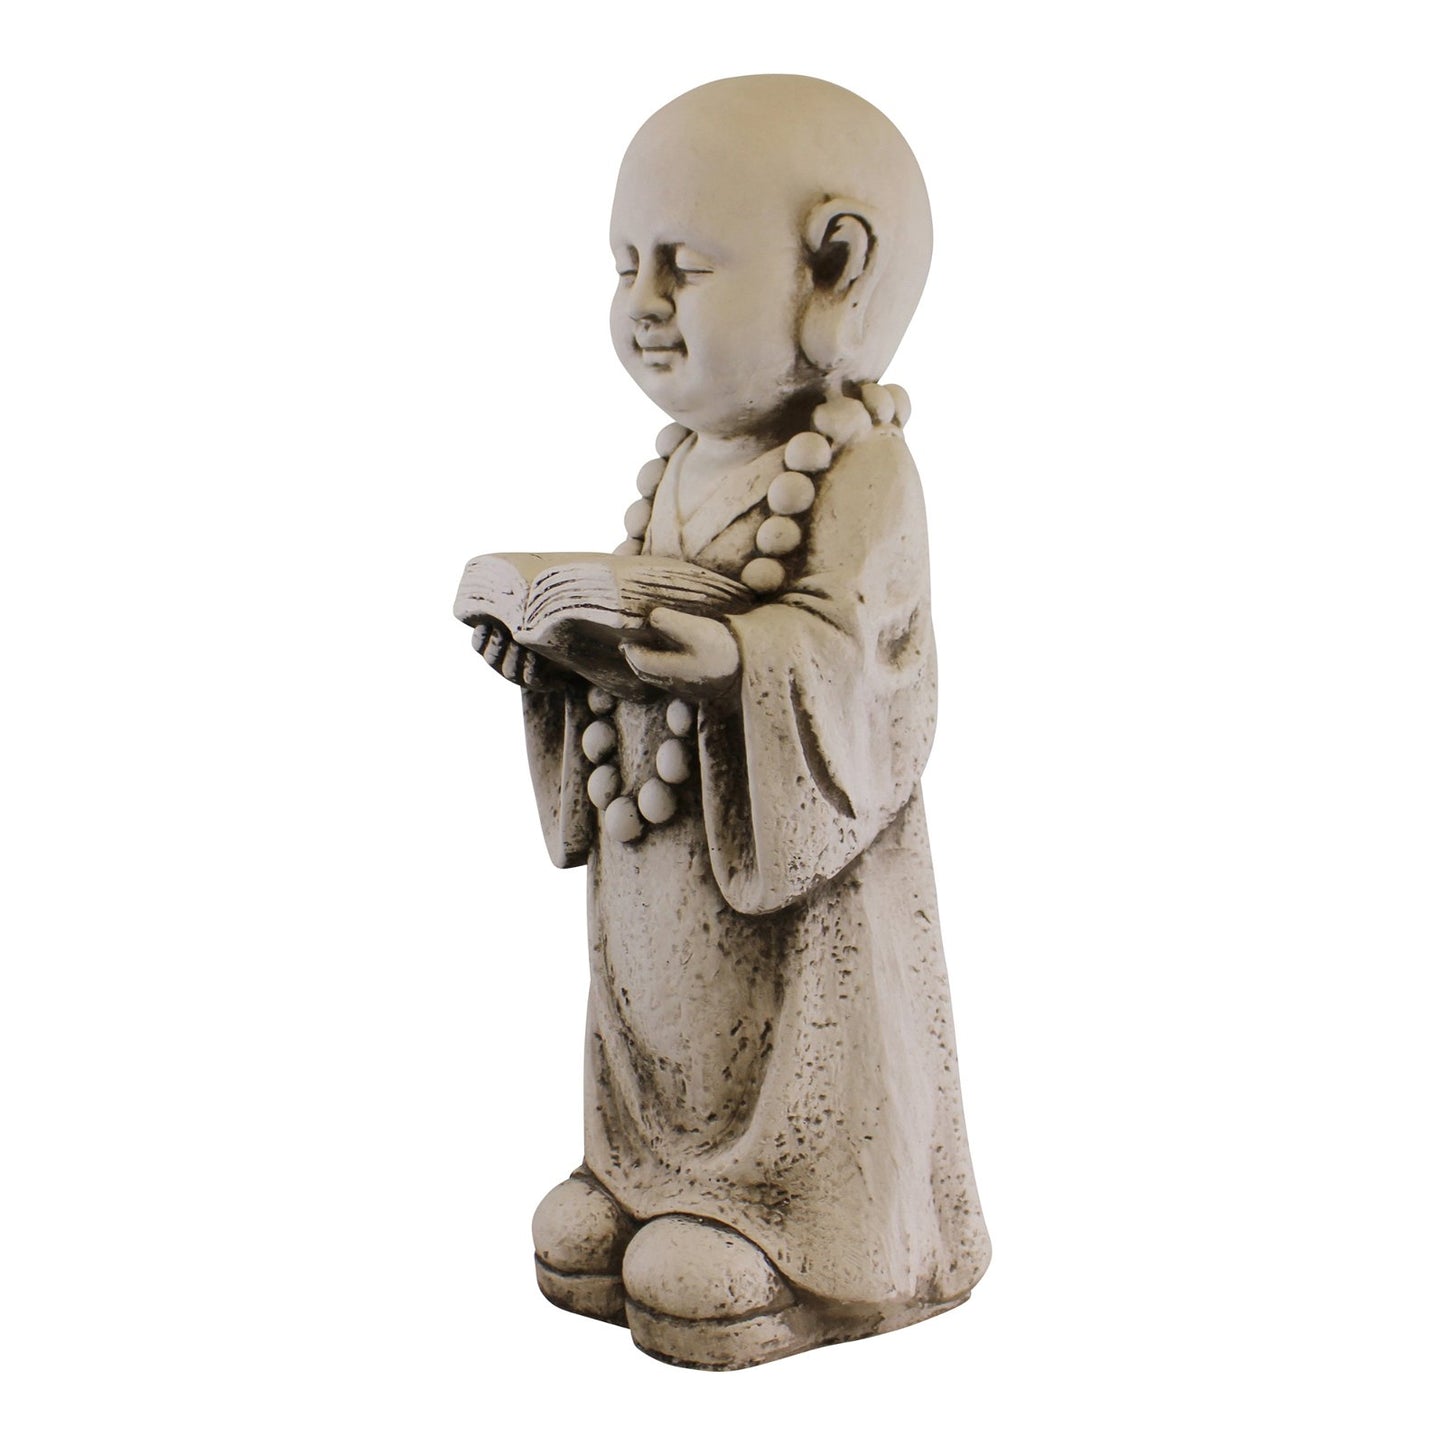 Stone Effect Garden Ornament, Monk Reading